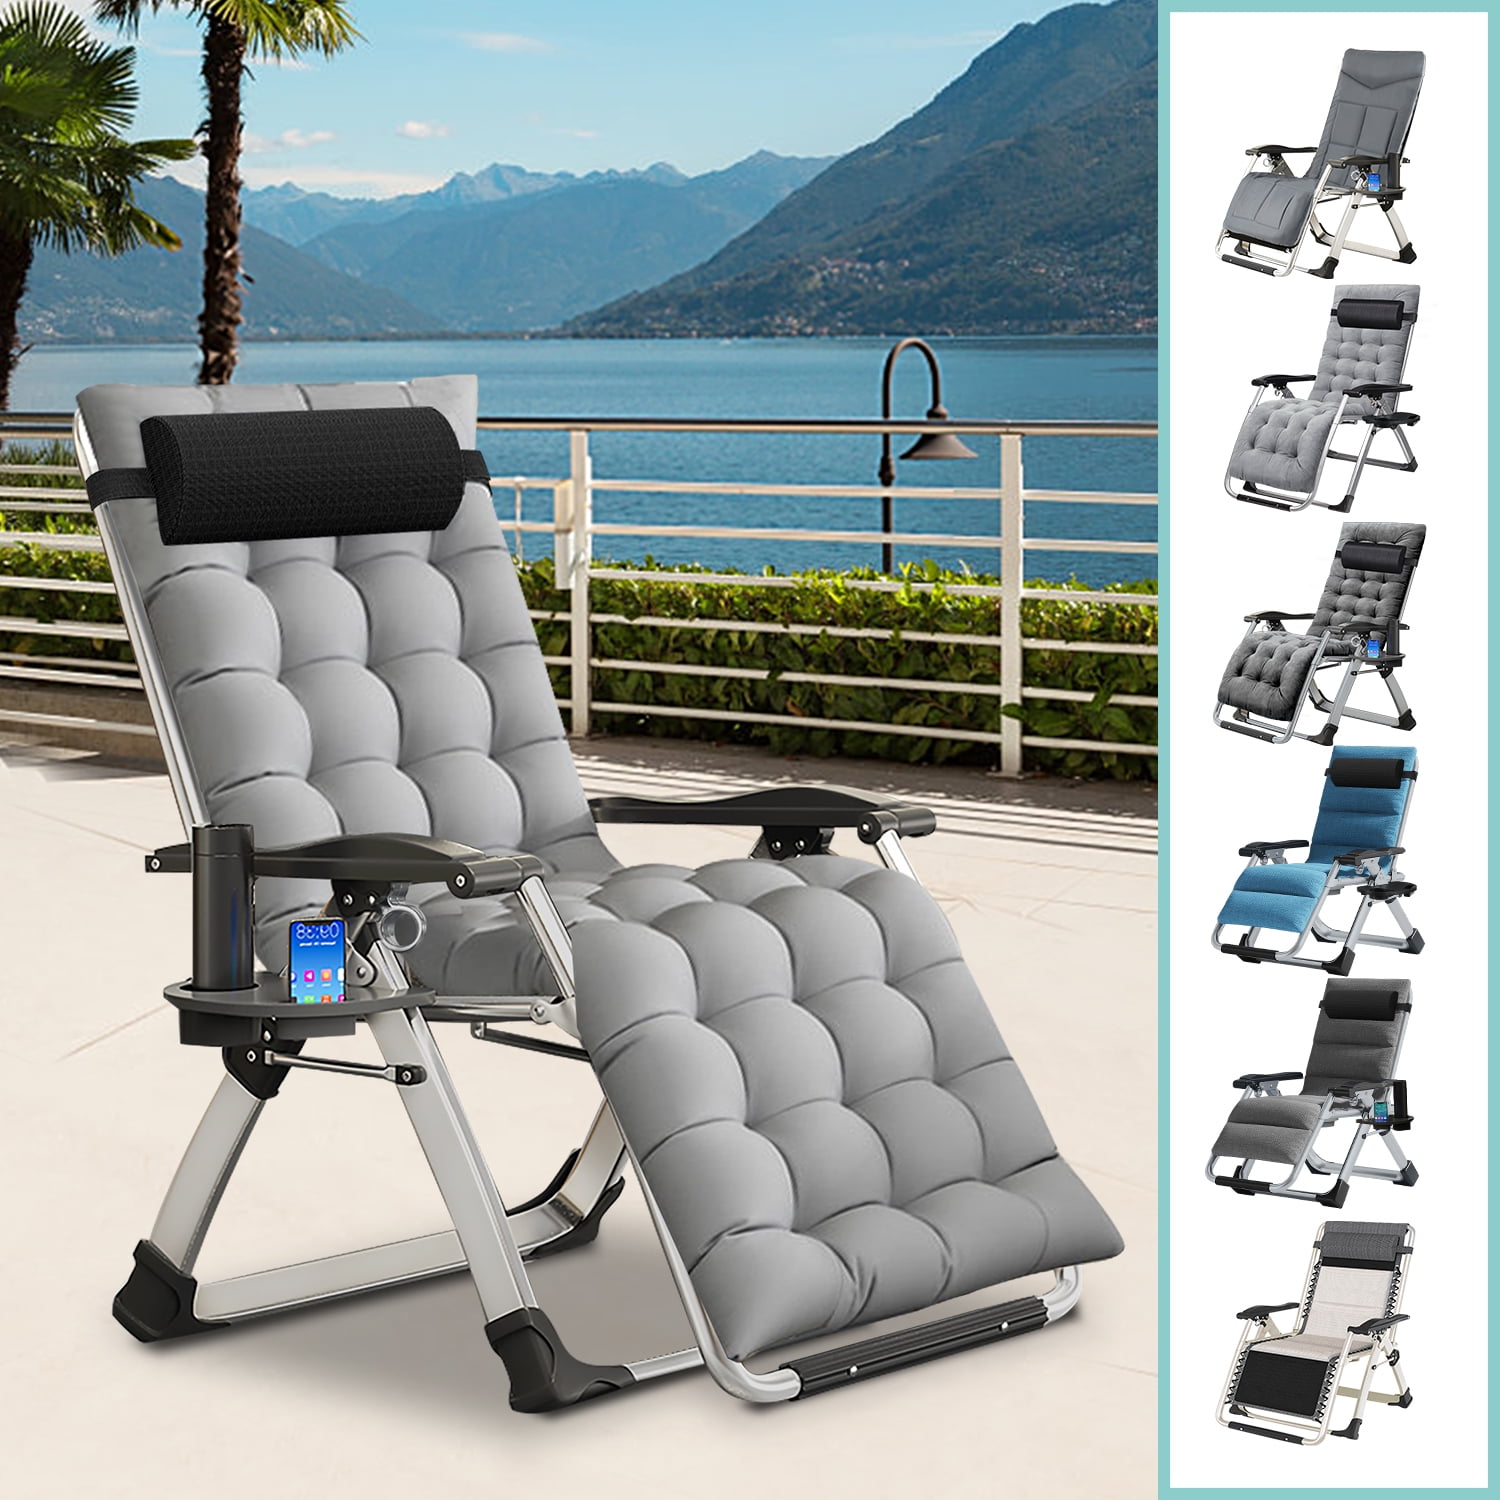 HIZLJJ Zero Gravity Folding Chair Office Adjustable Siesta Lounge Chair Balcony Lounge Chair Summer Sun Loungers Outdoor Beach Camping Chair